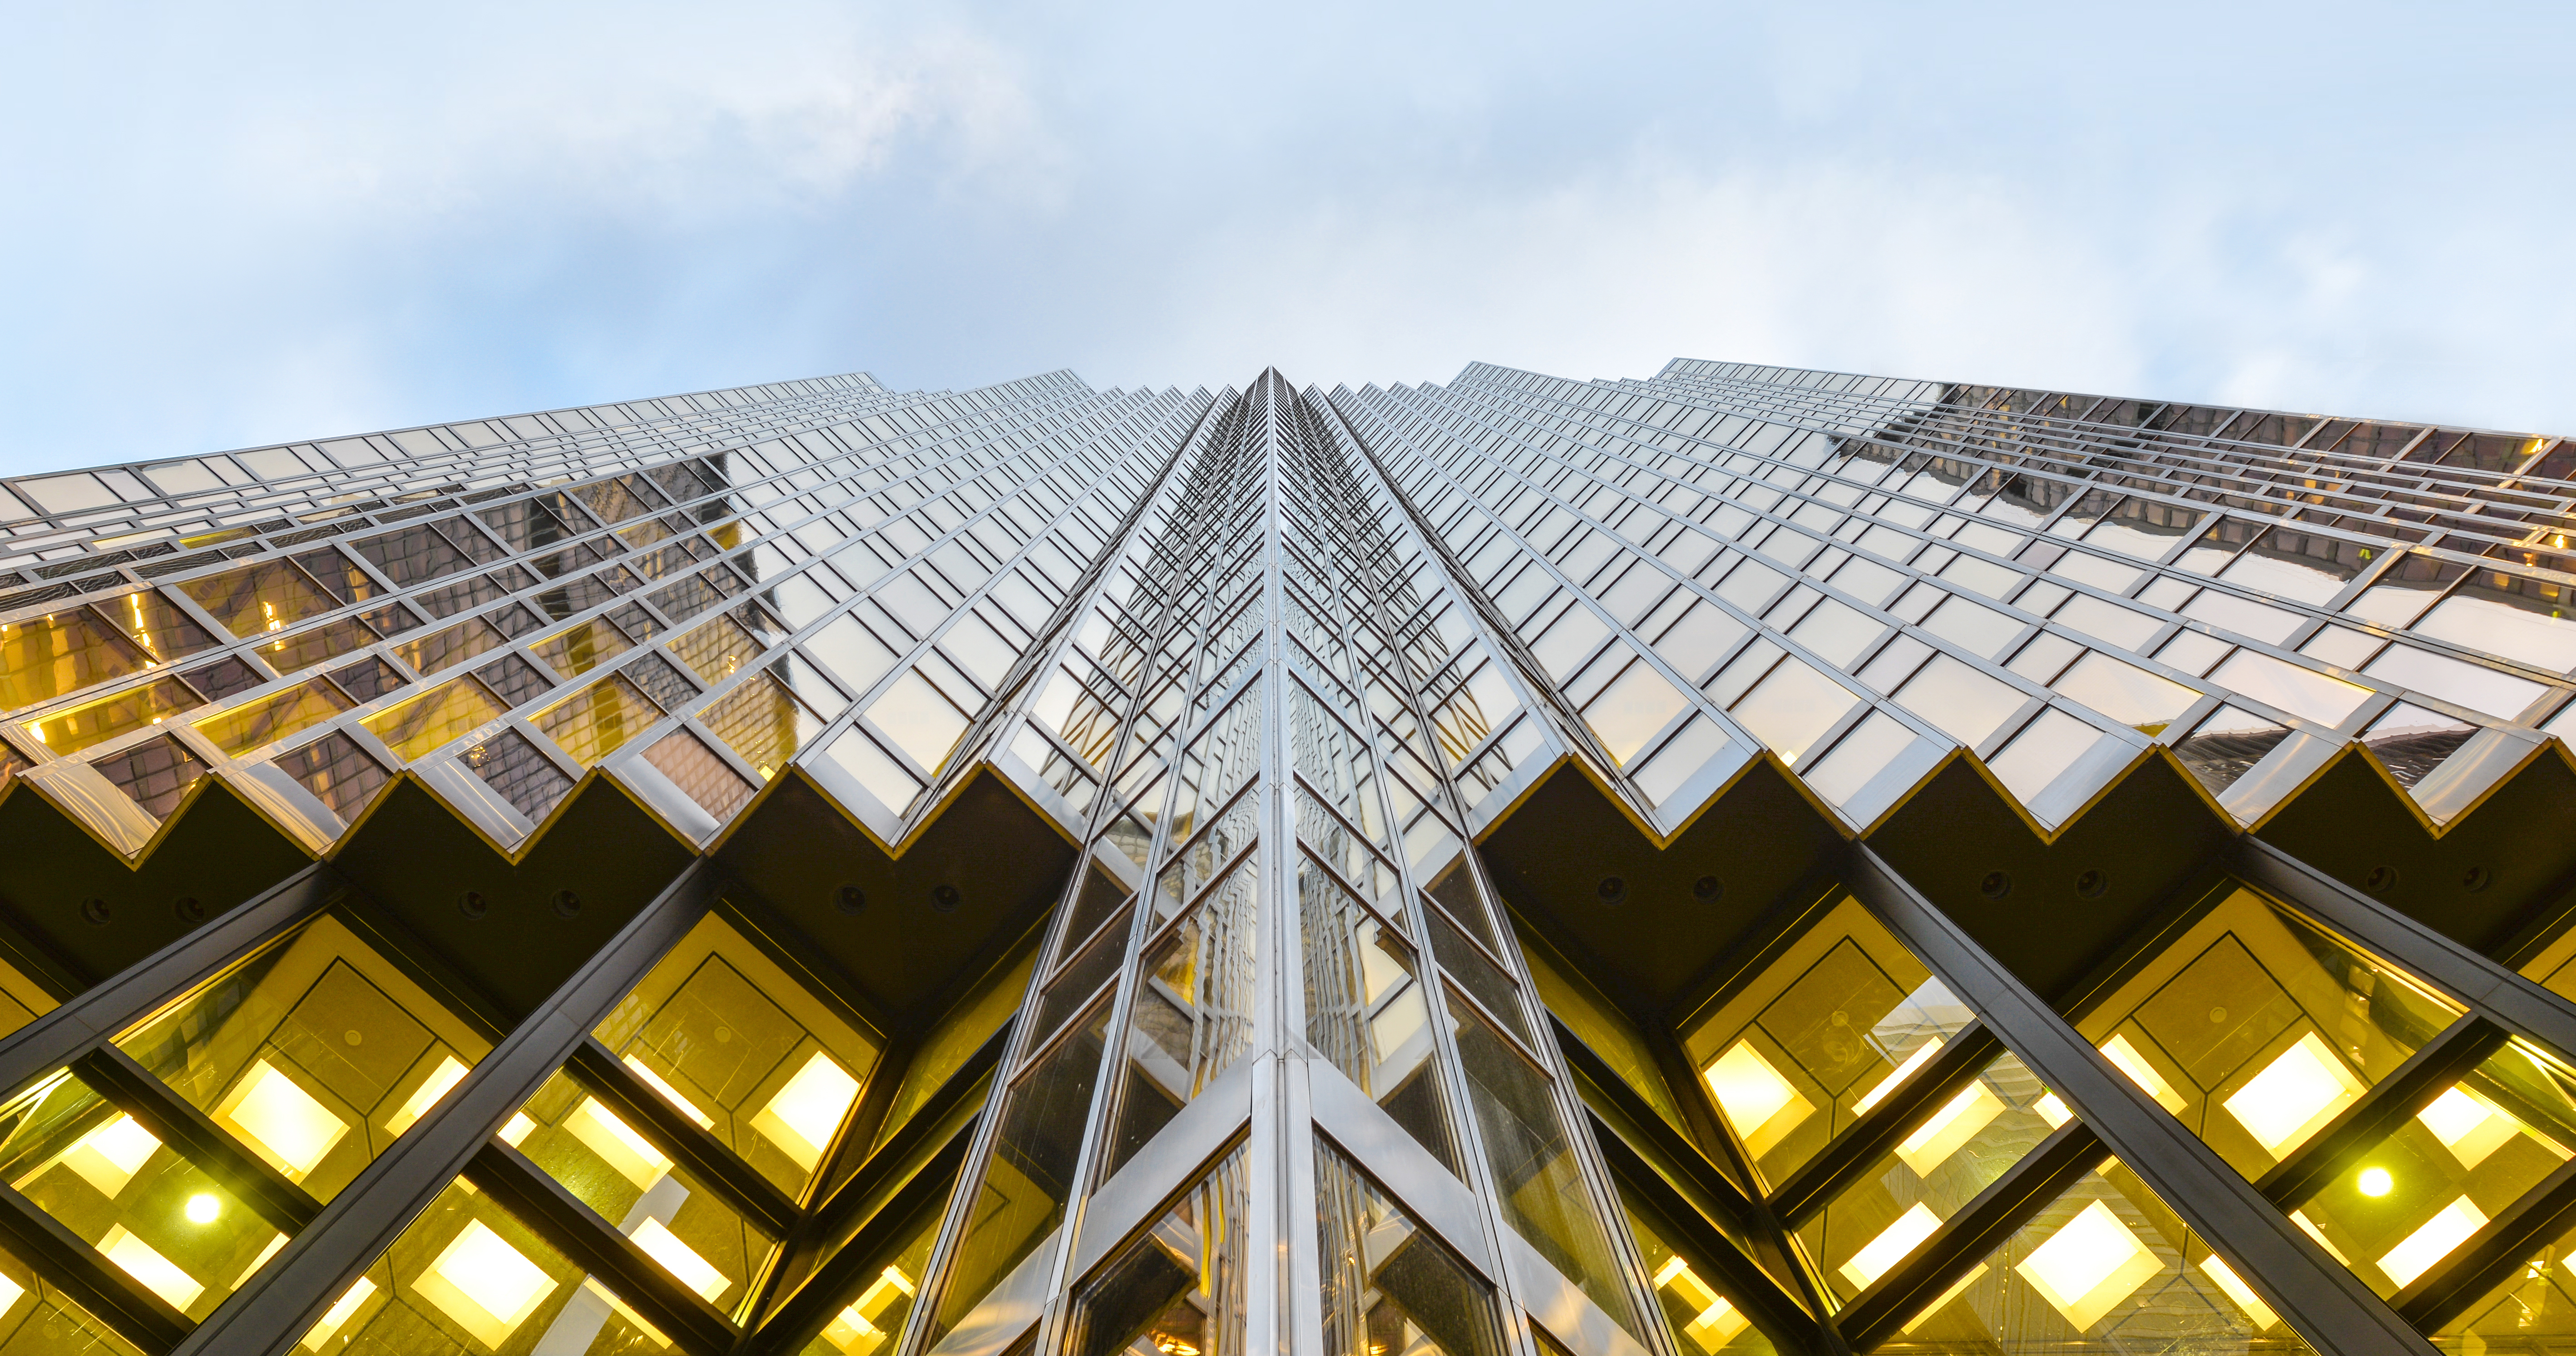 RBC Tower in Toronto